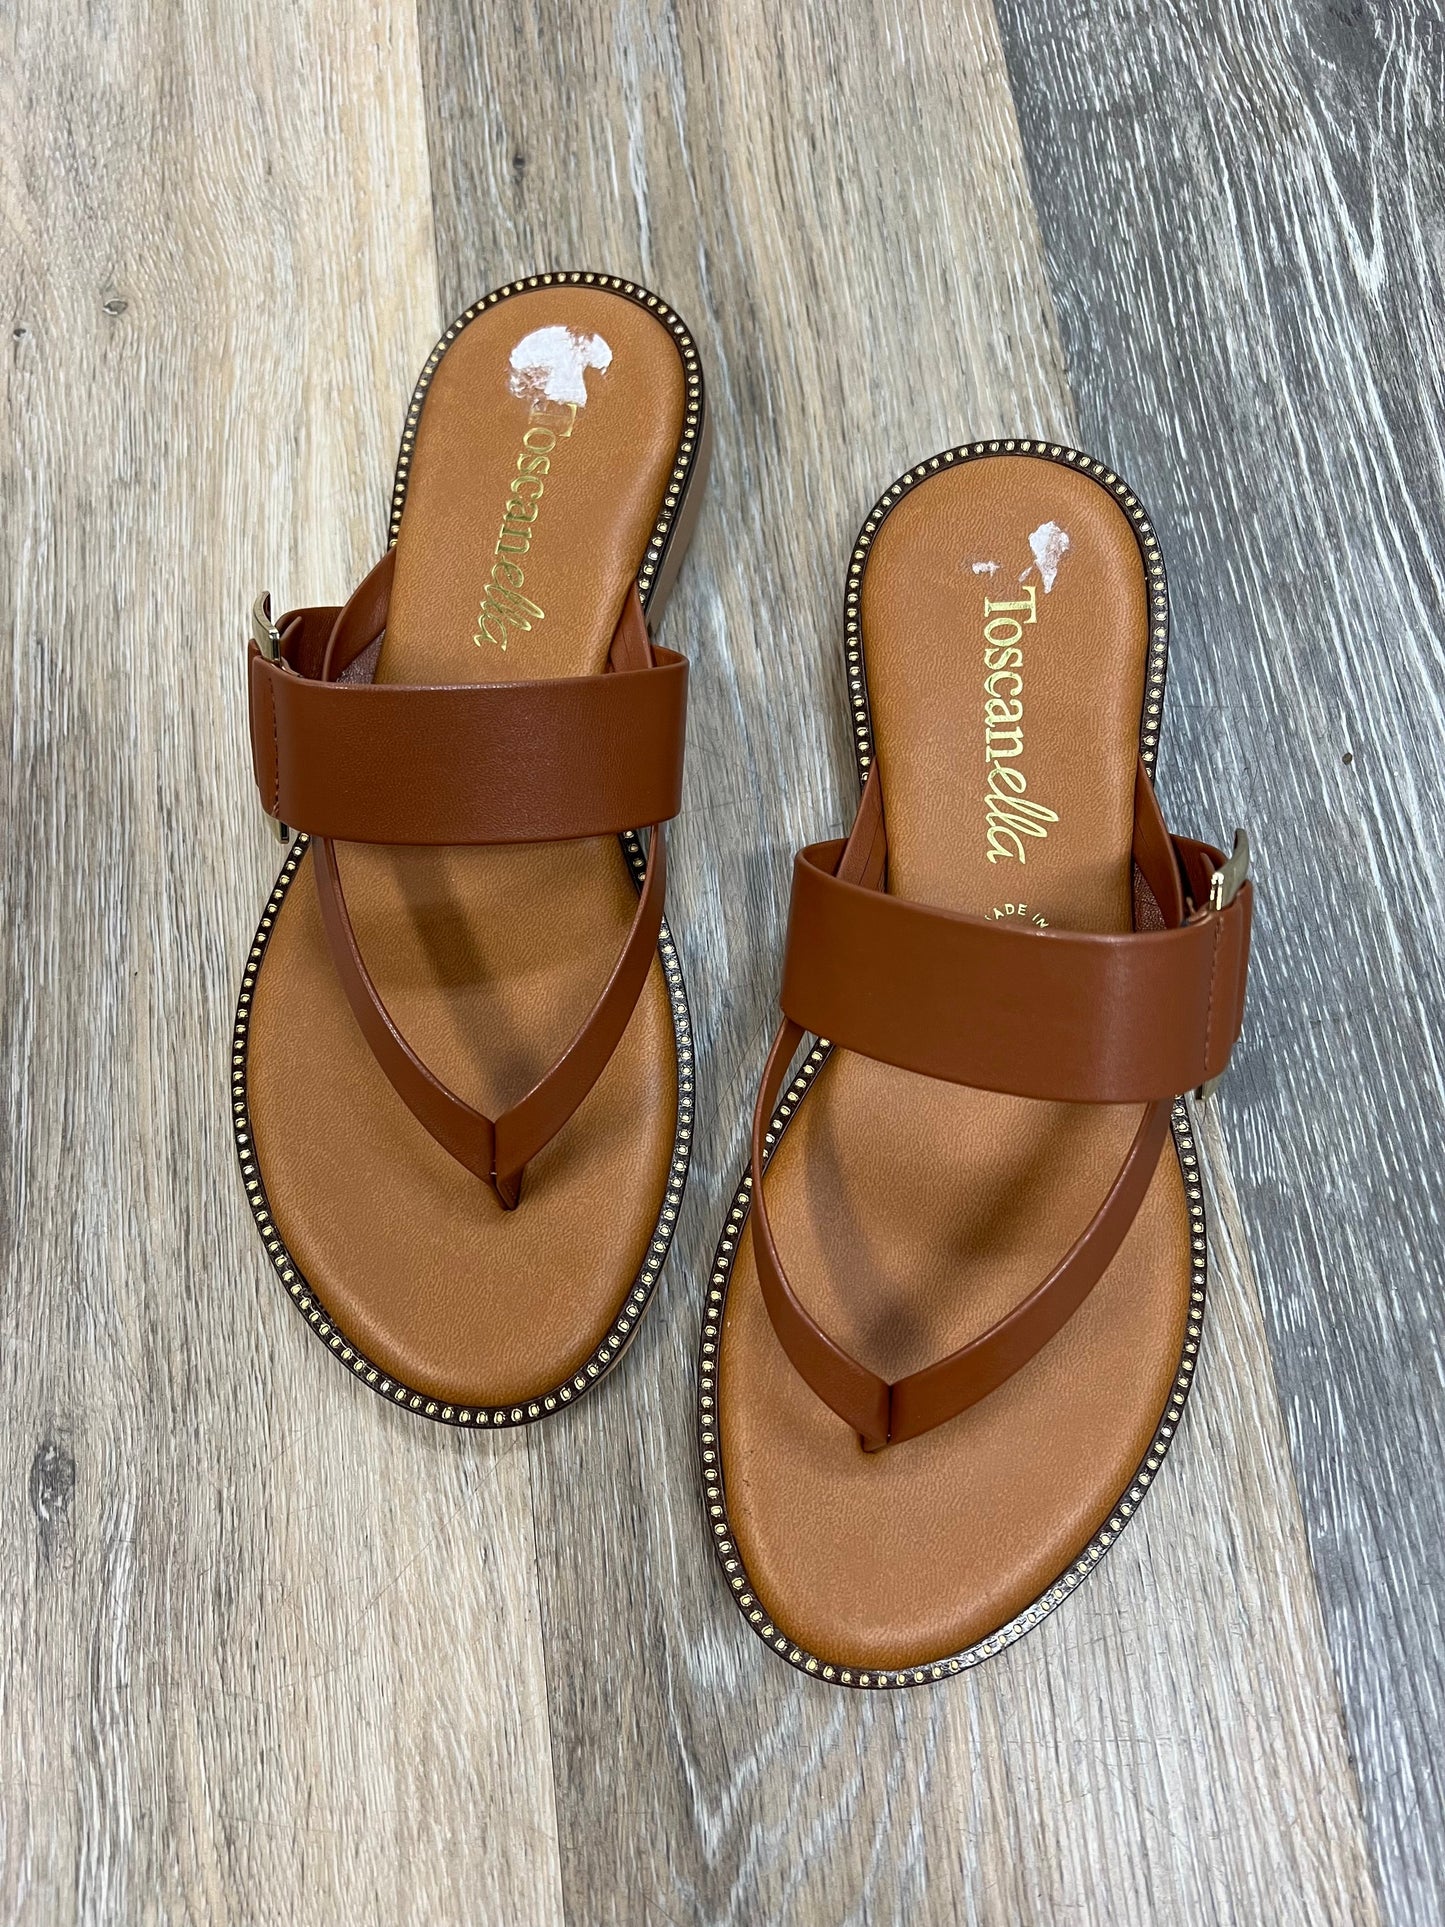 Brown Sandals Flip Flops Toscanella, Size 8.5